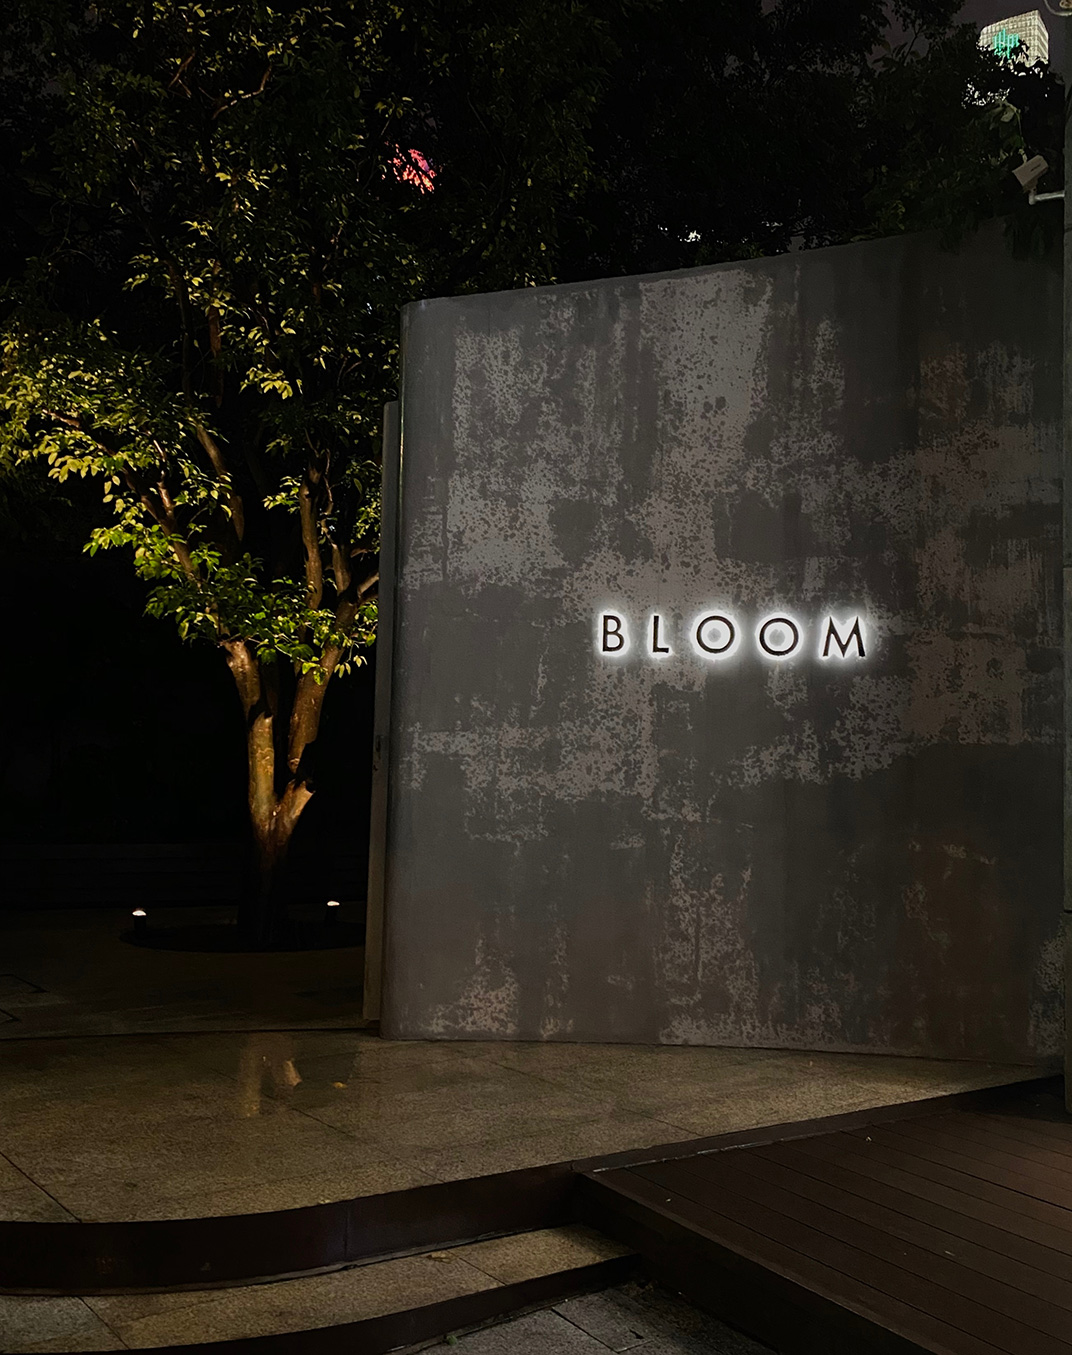 BLOOM 上海西餐厅 上海 西餐 创意餐厅 logo设计 vi设计 空间设计